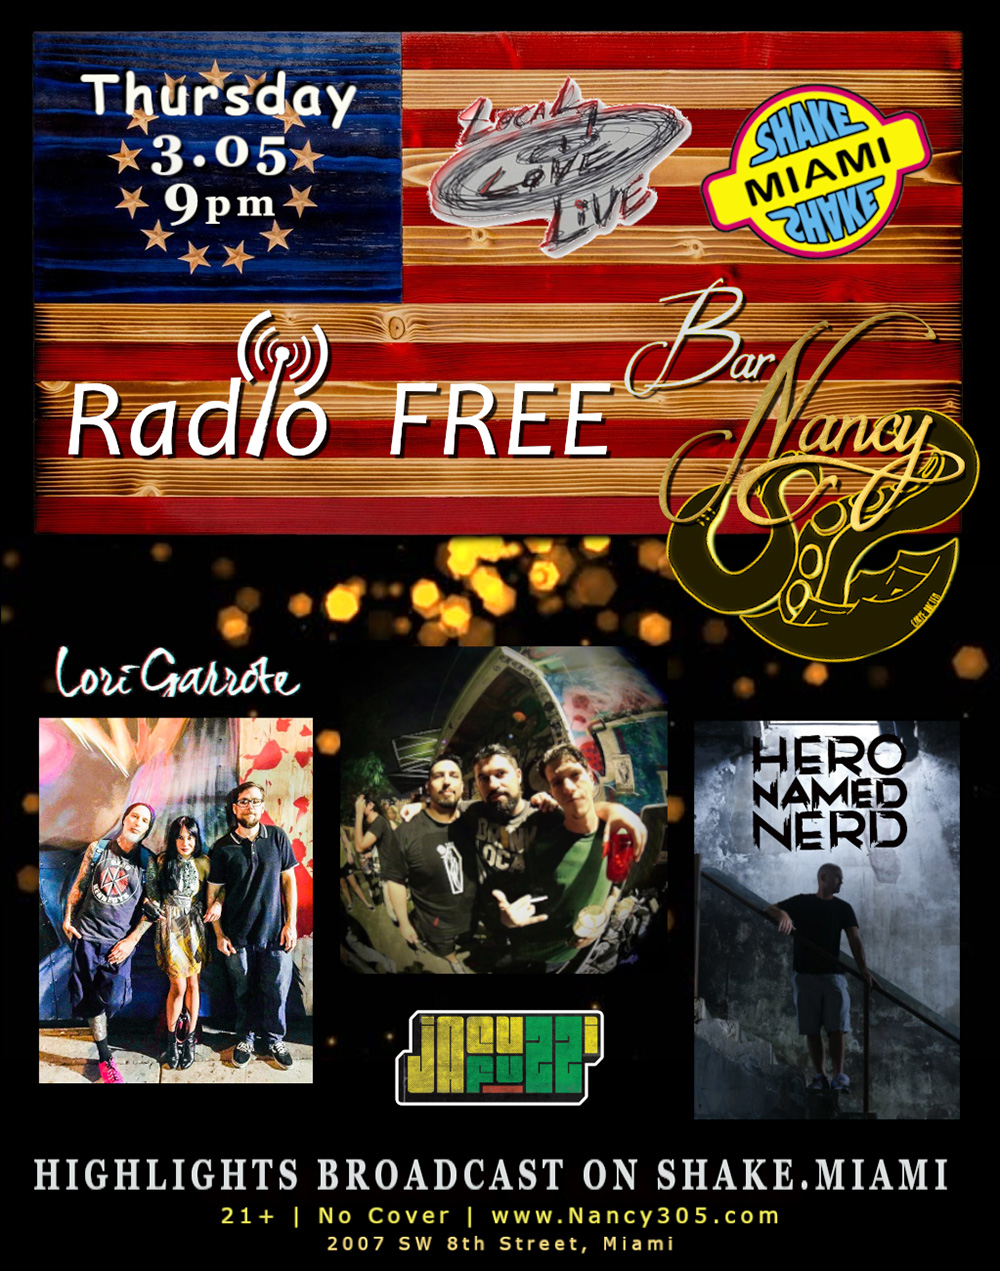 Radio Free Nancy! Presented by Local. Love. Live & Shake Miami!